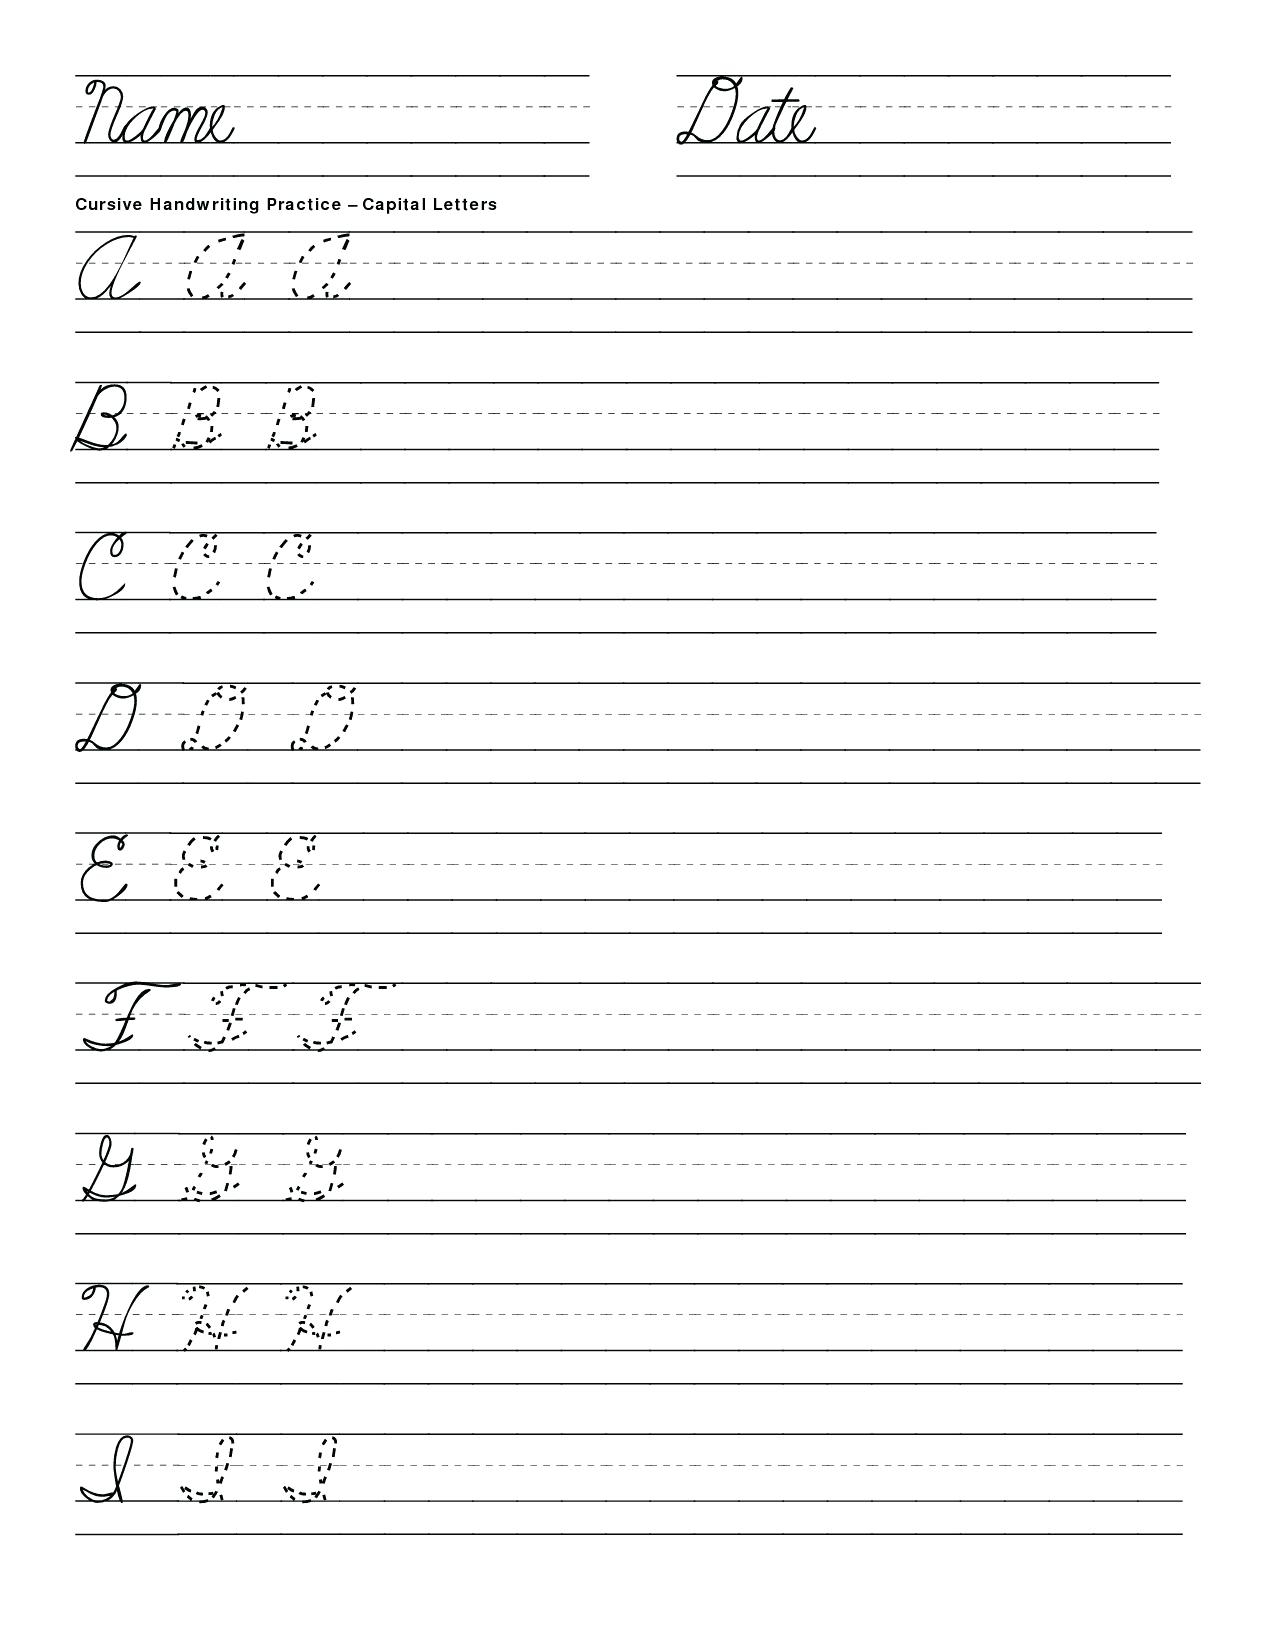 Cursive Writing Capital Letters Worksheets Writing Cursive Capital 